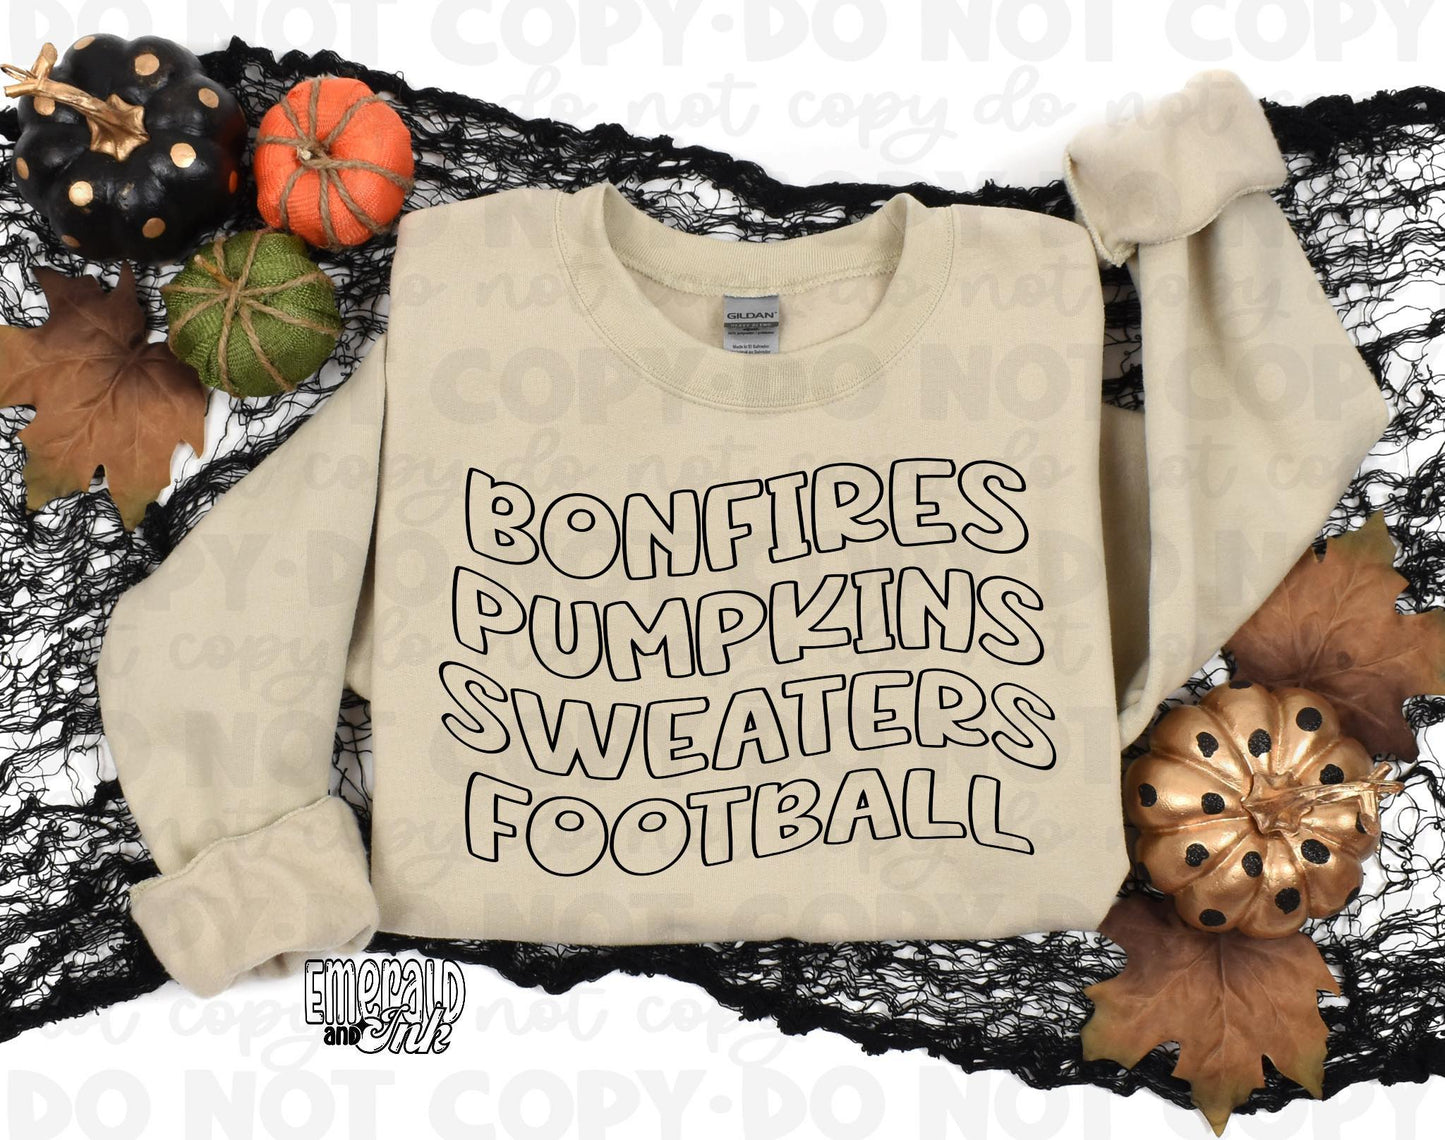 Bonfires Pumpkins Sweaters Football - regular screen print transfer